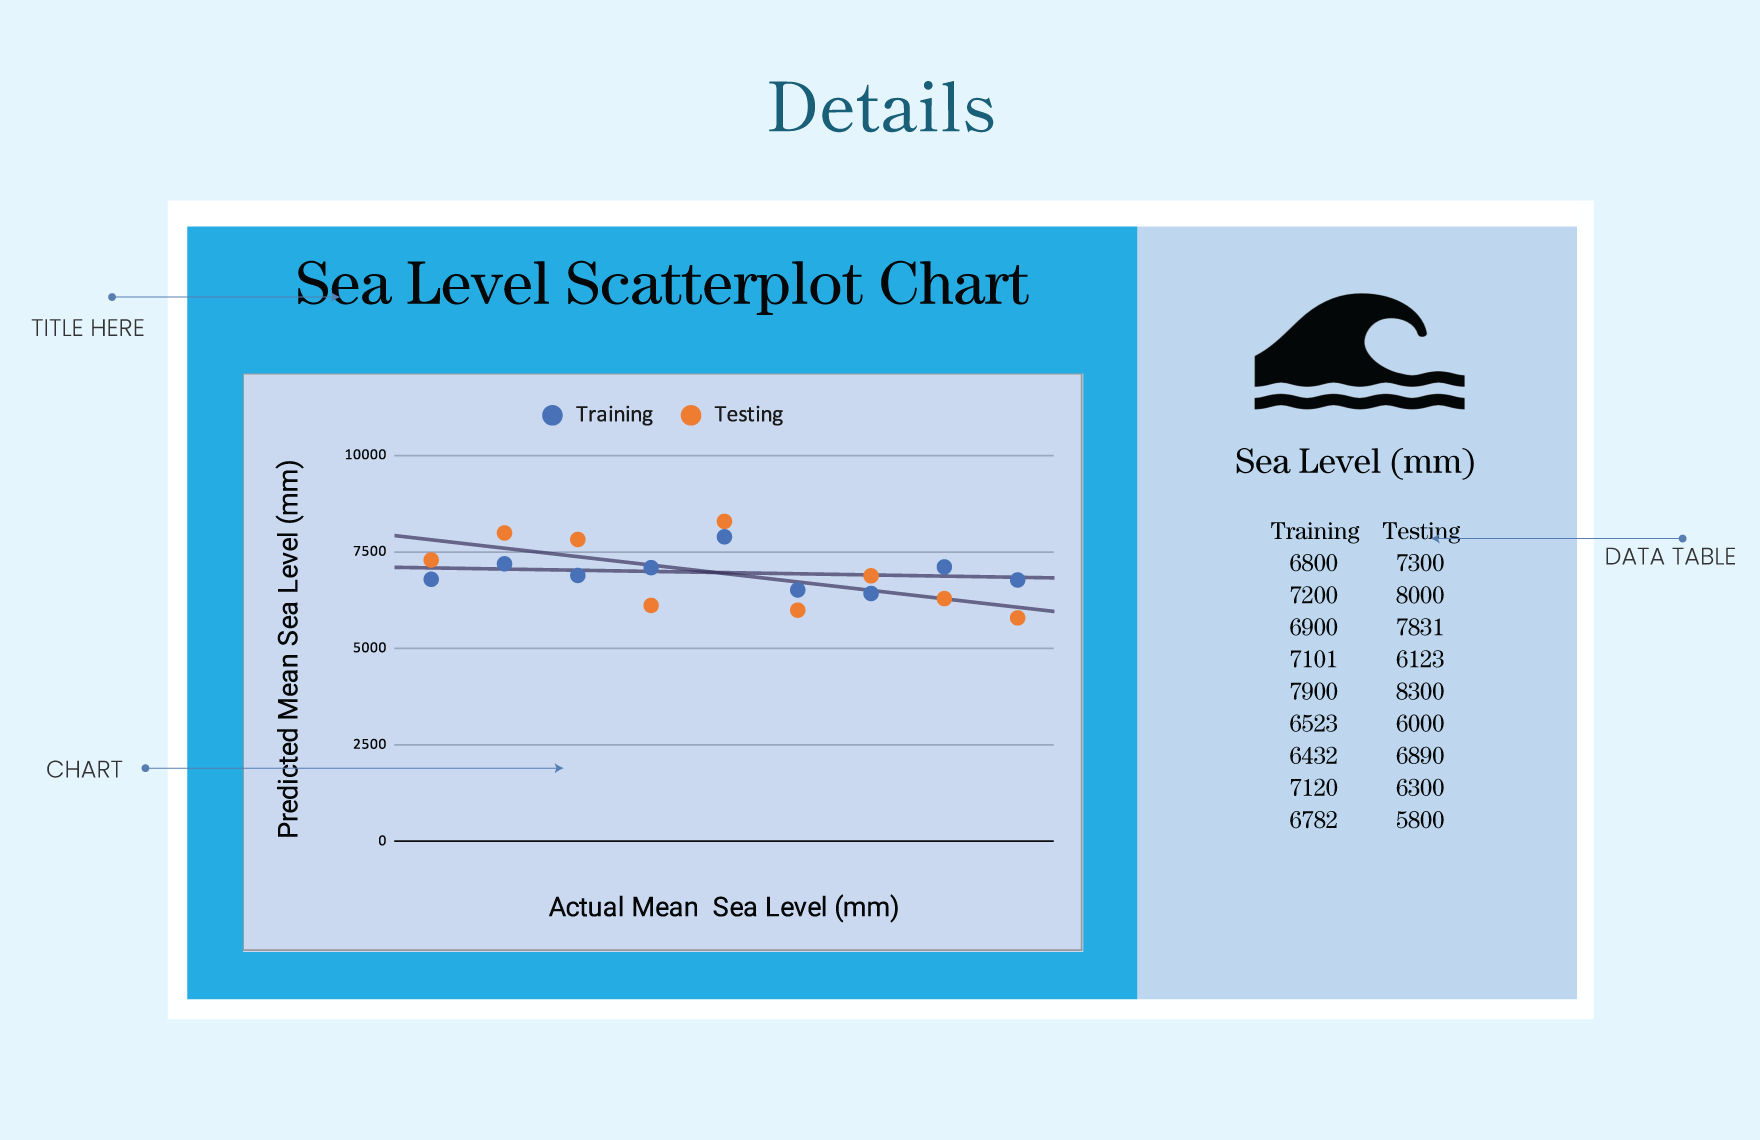 Sea Level Scatterplot Chart